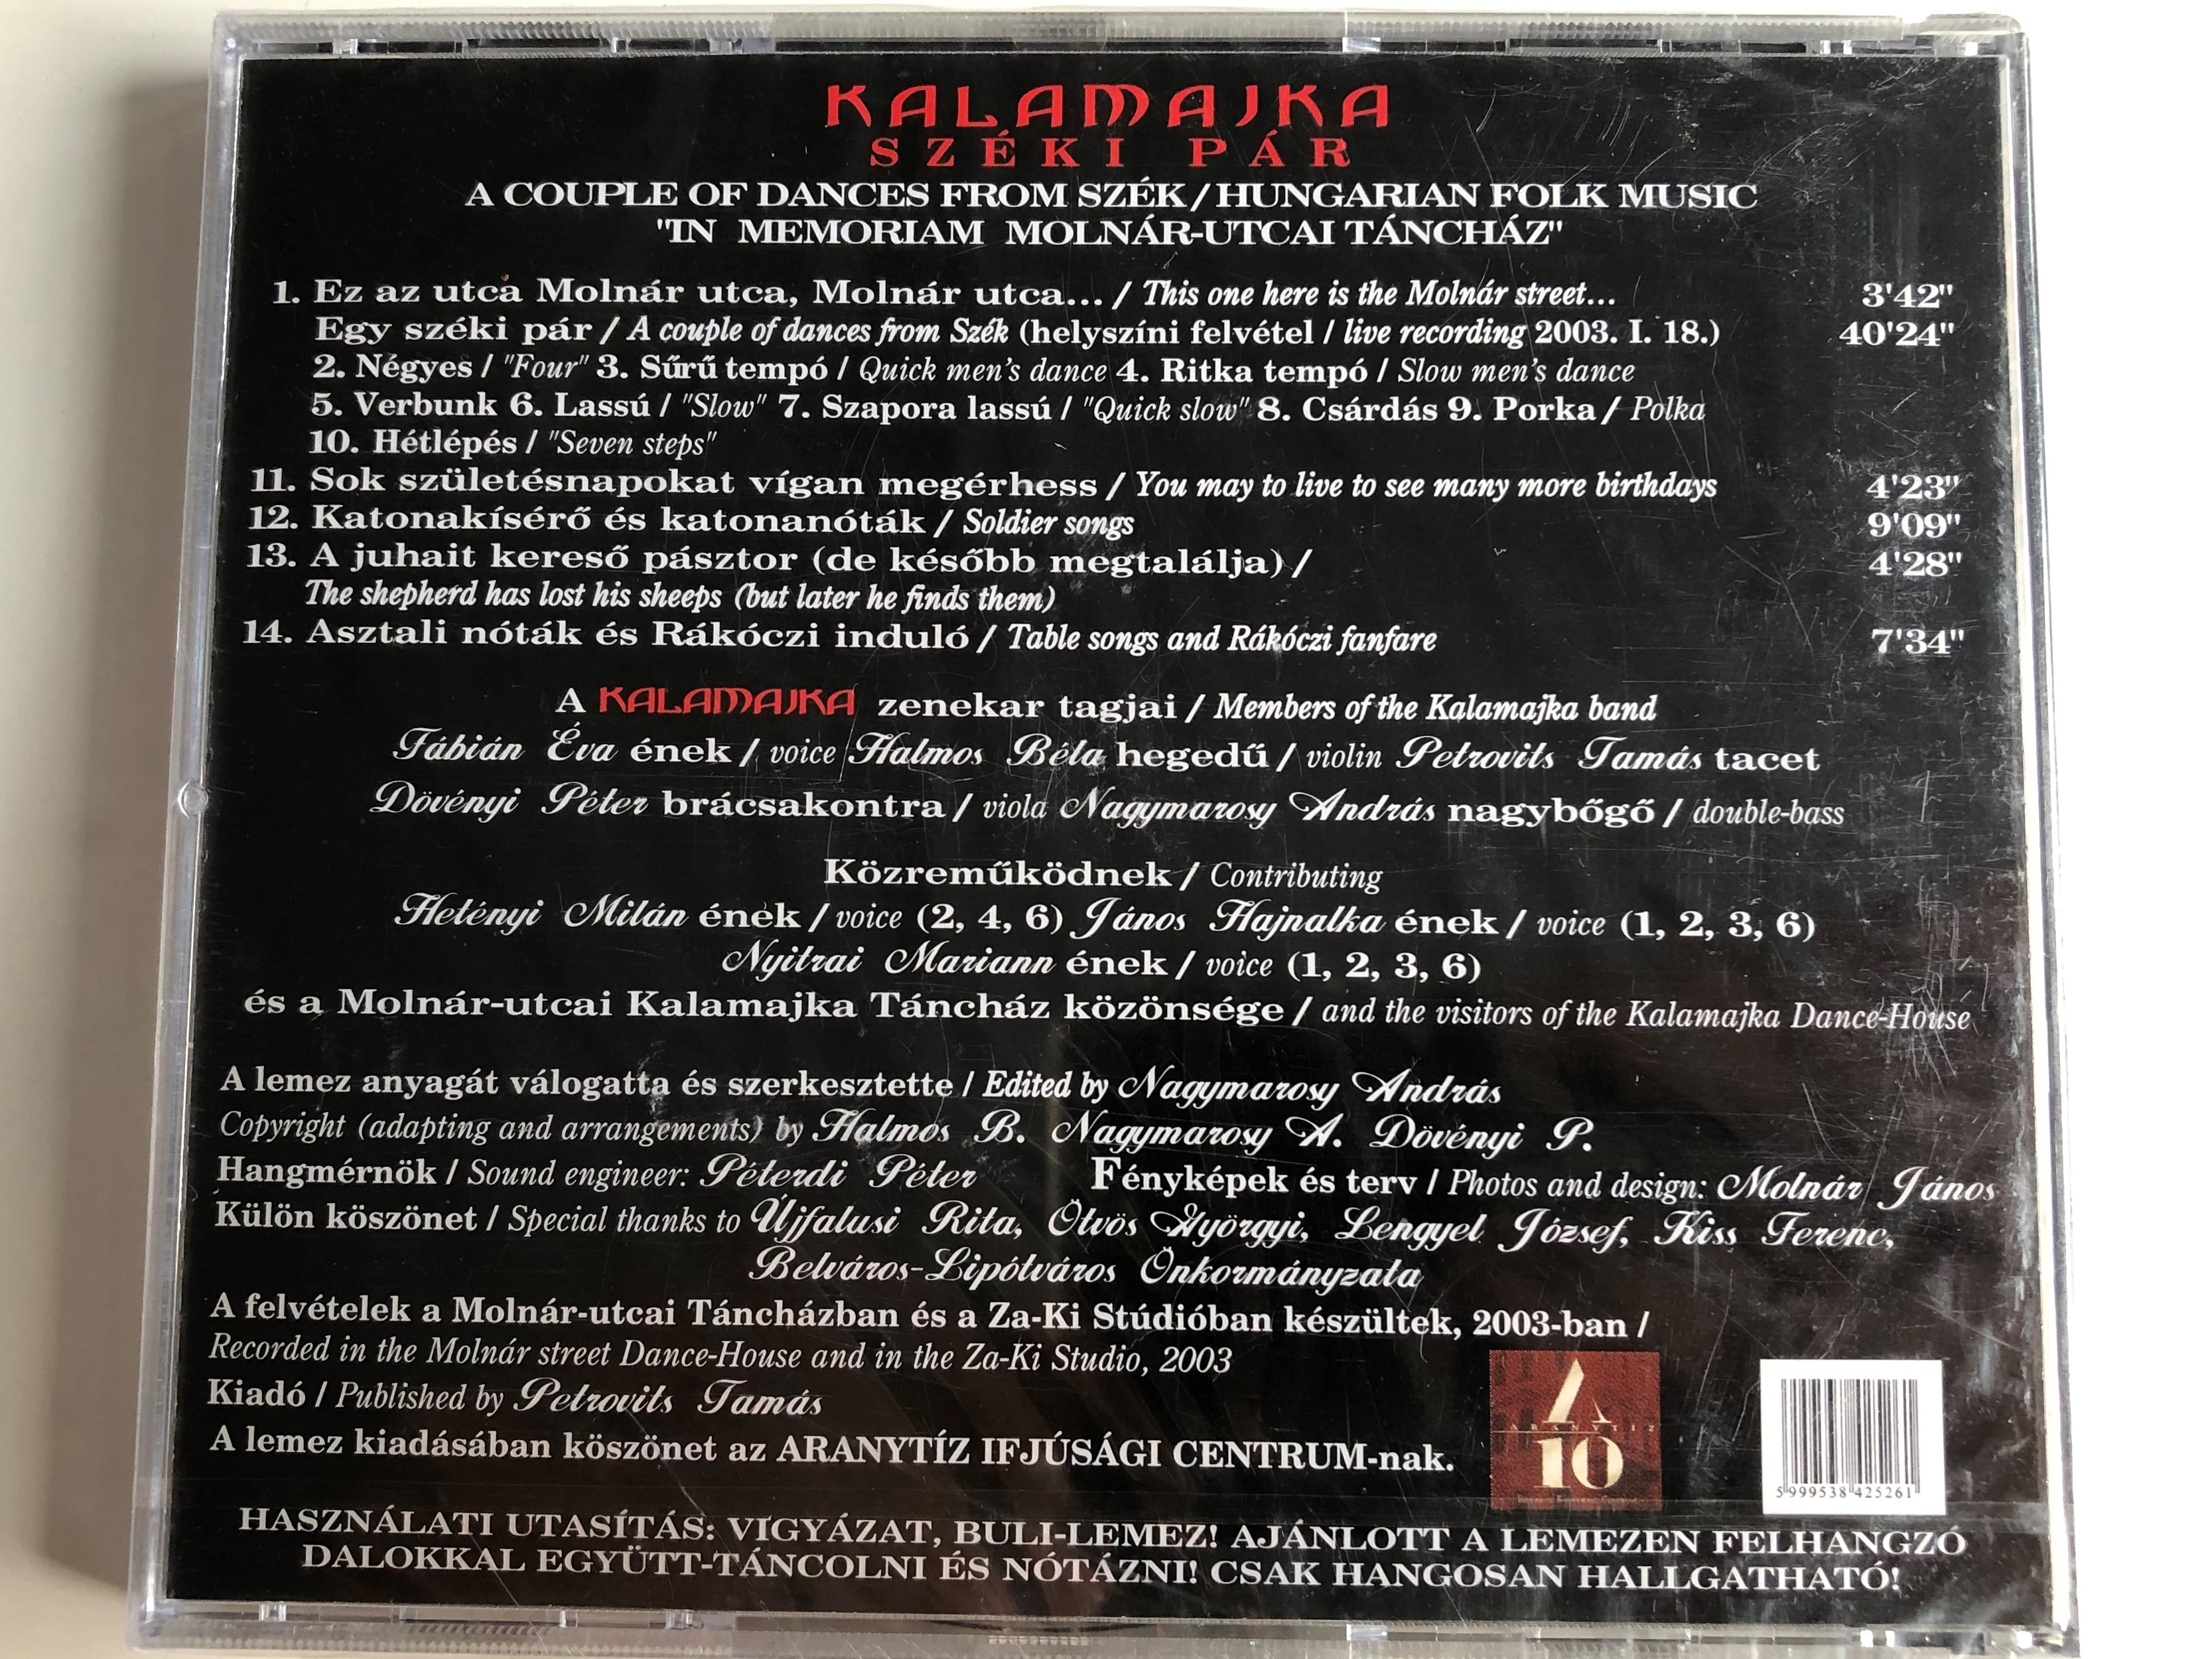 Kalamajka ''In Memoriam Molnar-Utcai Tanchaz'' / Széki pár. "In memoriam  Molnár utcai táncház" - A Couple of Dances From Szek / Molnar street  Dance-House Audio CD 2003 - bibleinmylanguage